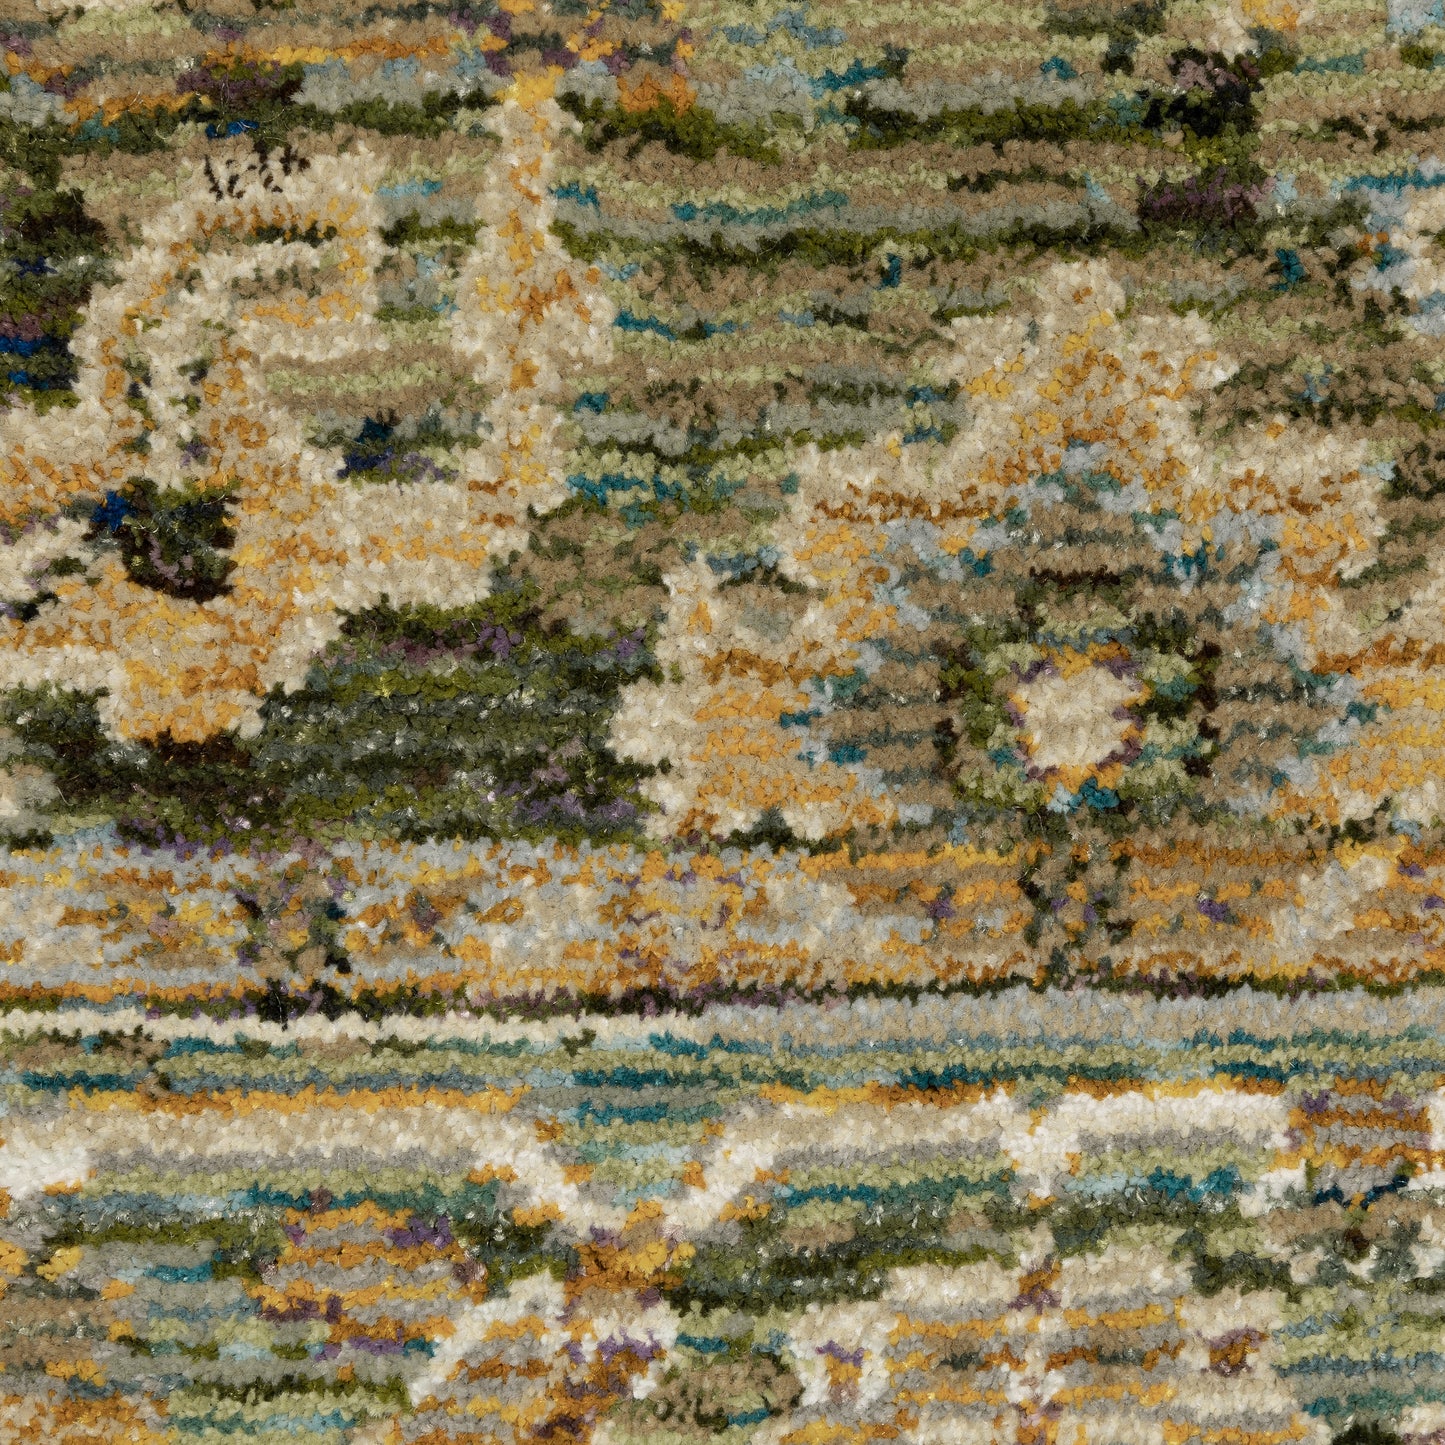 ANDORRA Distressed Power-Loomed Synthetic Blend Indoor Area Rug by Oriental Weavers